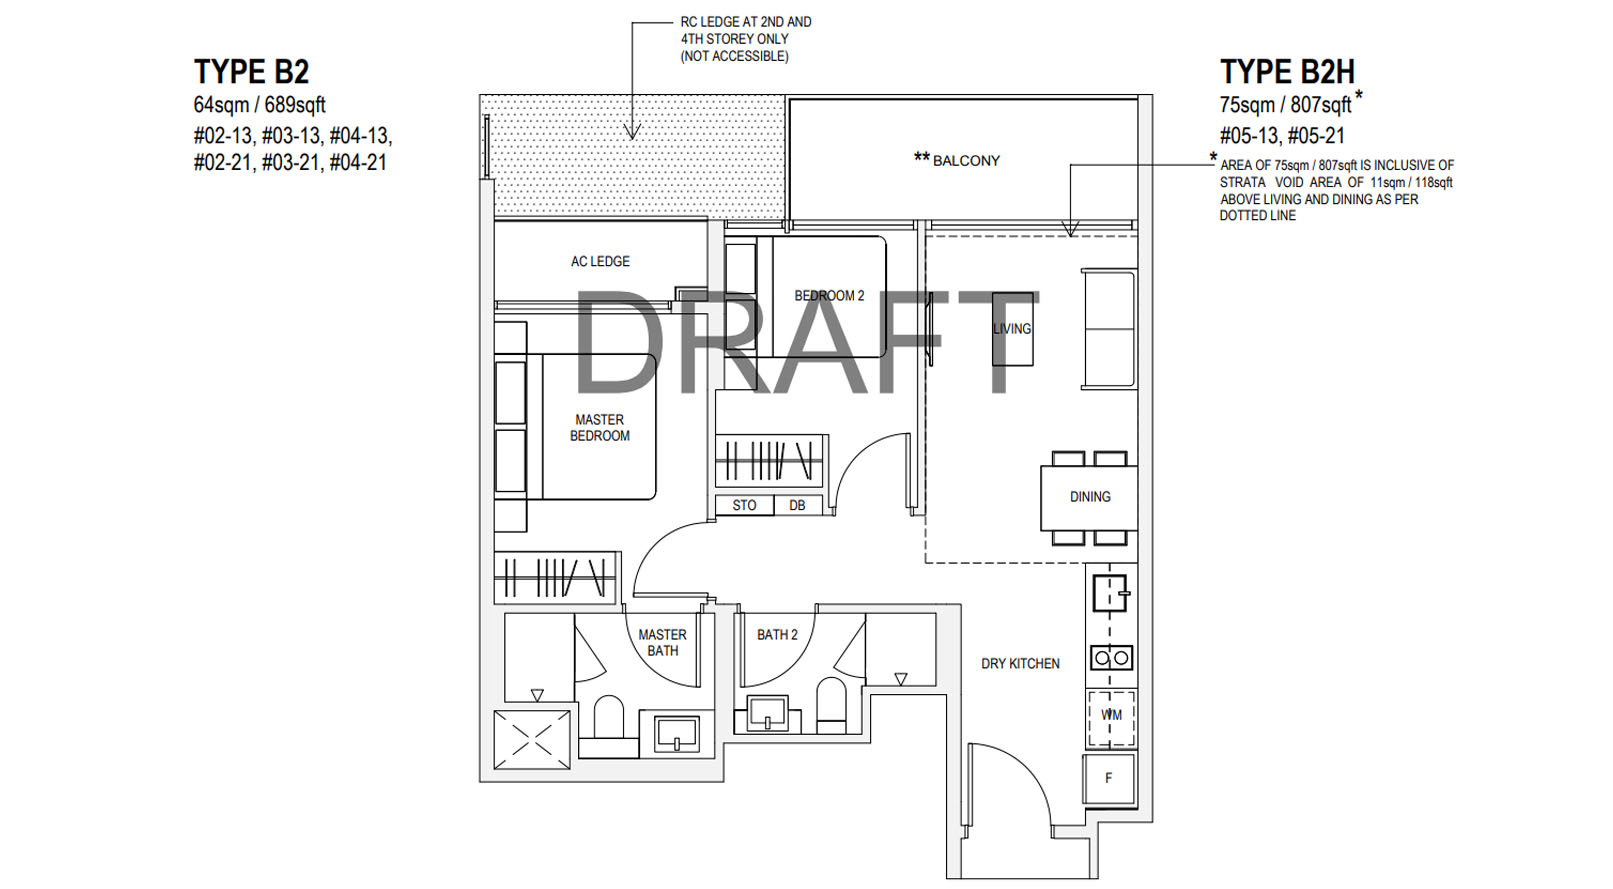 The Verandah Residences Units Mix and Floor Plans